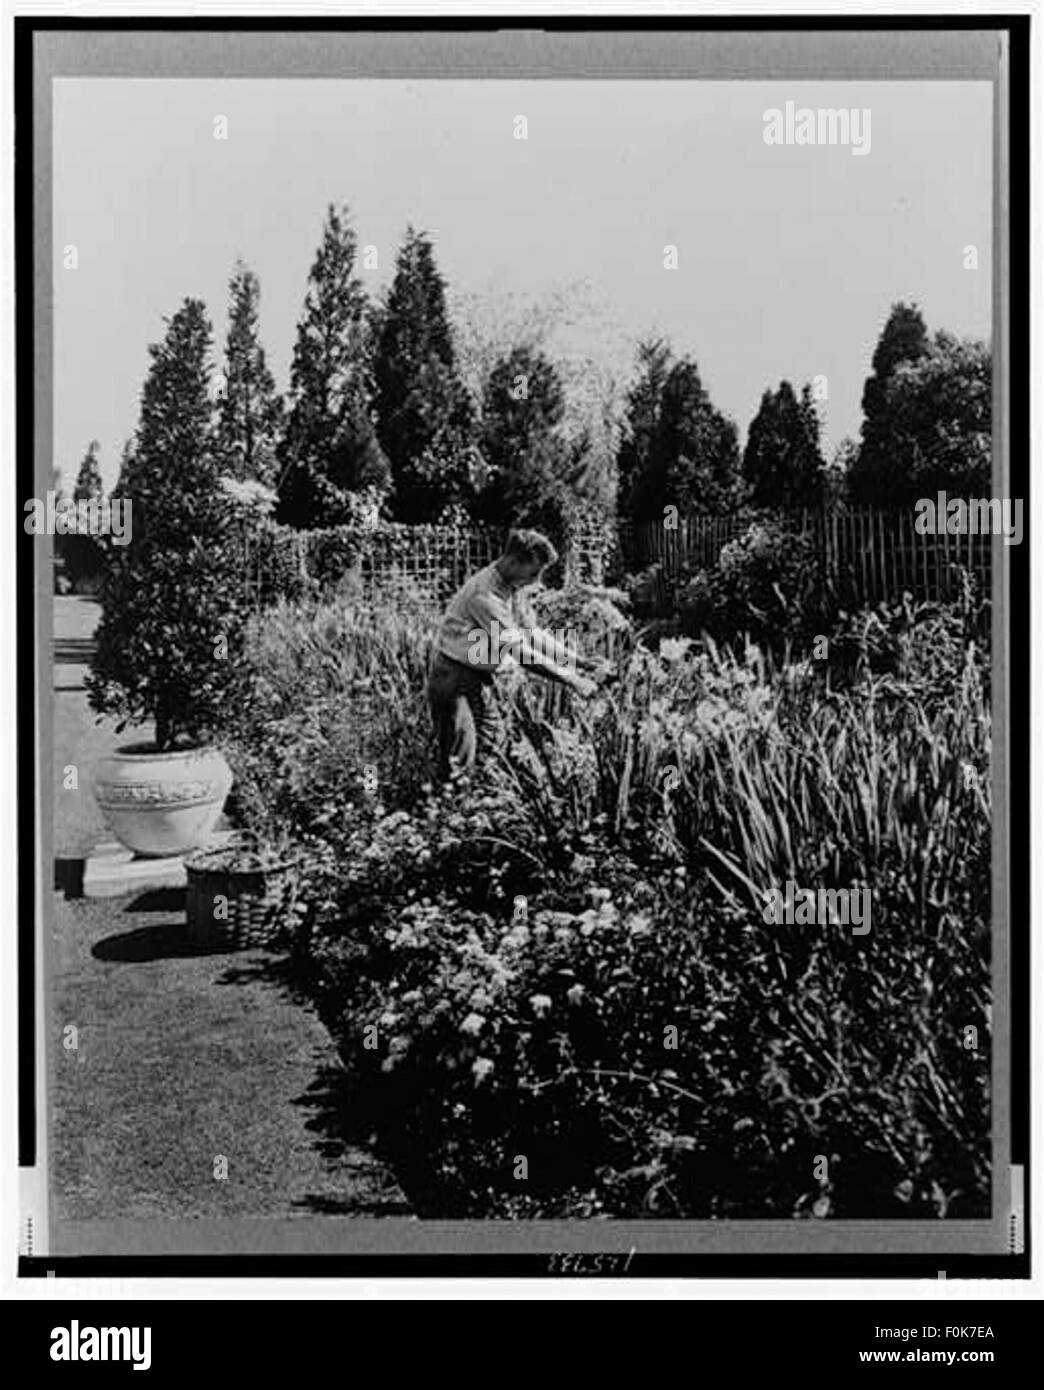 Giardiniere tende floreali, di confine poste per illustrare Rudyard  Kipling's Foto stock - Alamy